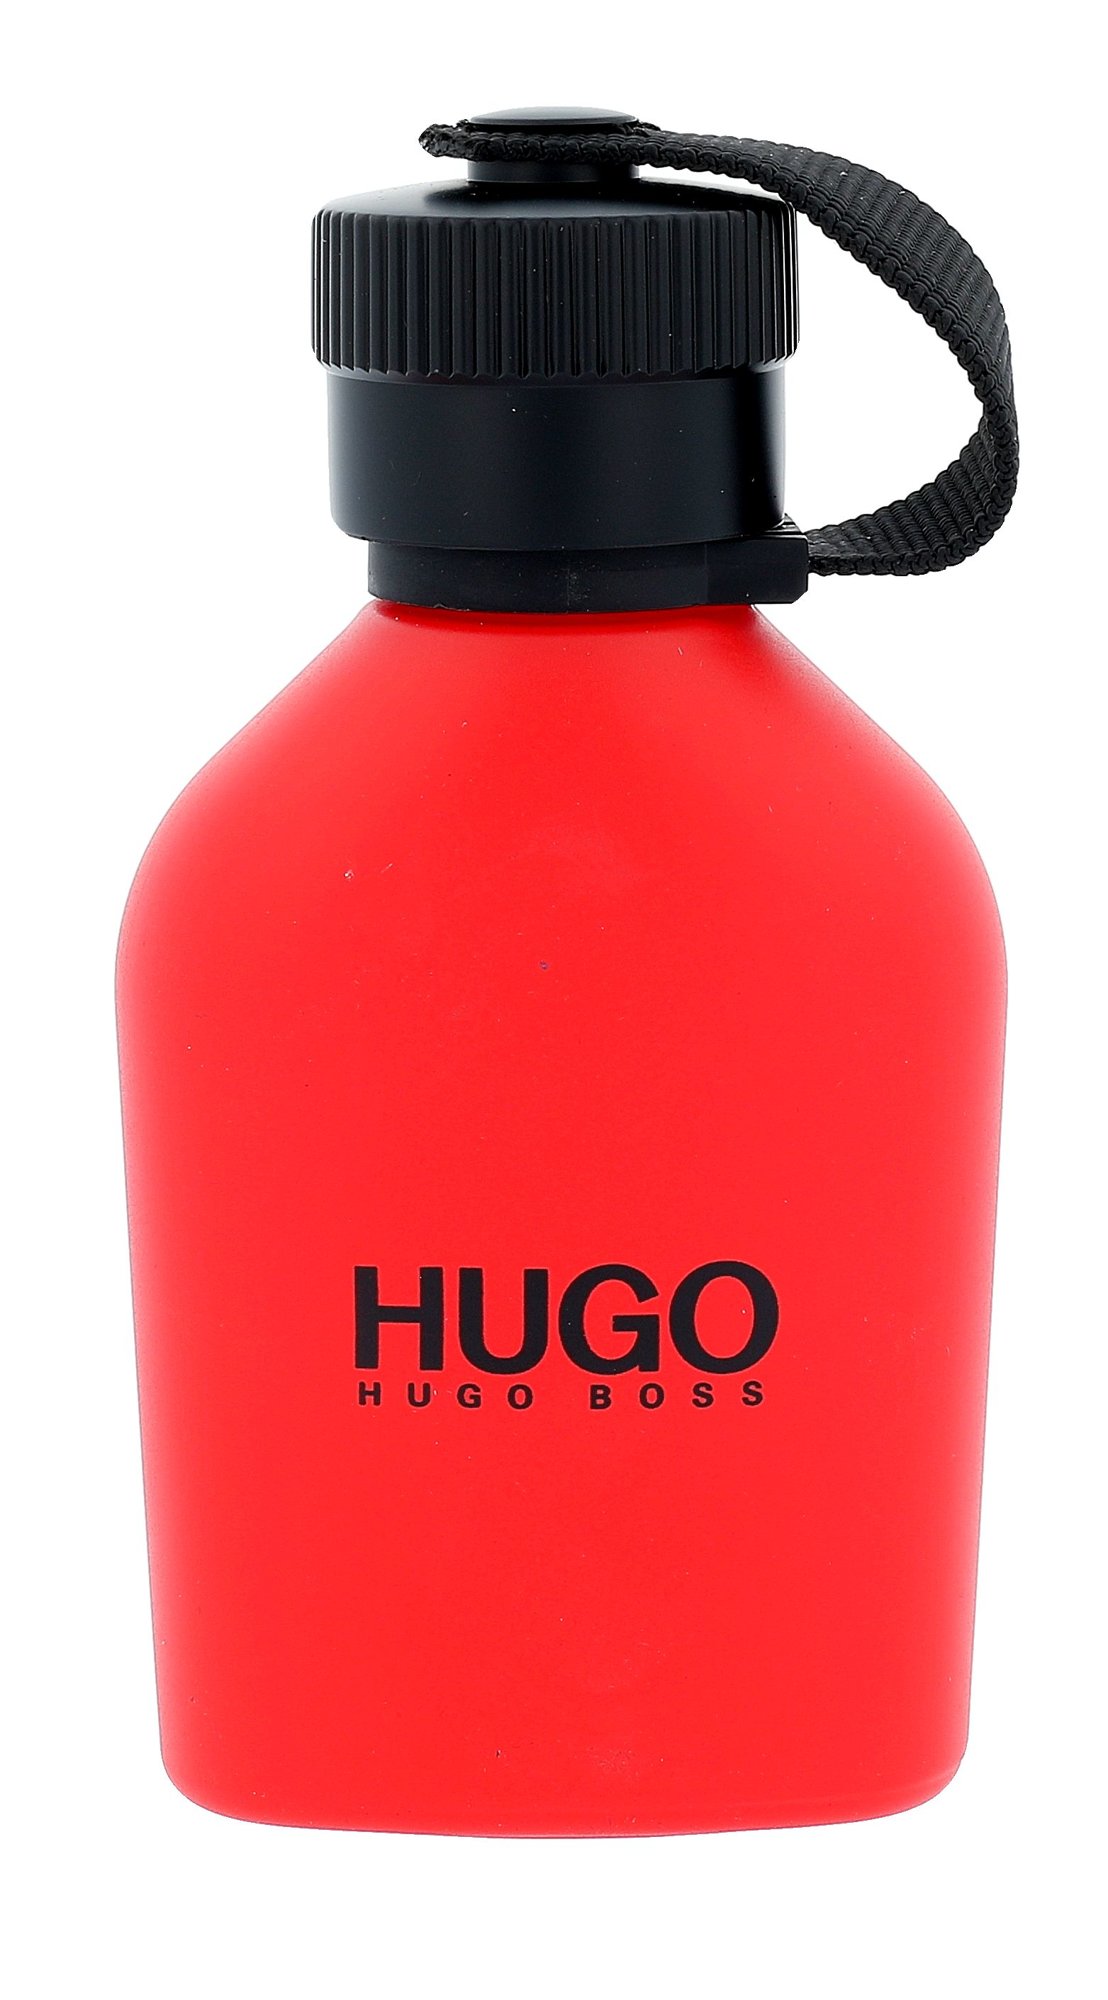 HUGO BOSS Hugo Red, Toaletná voda 75ml